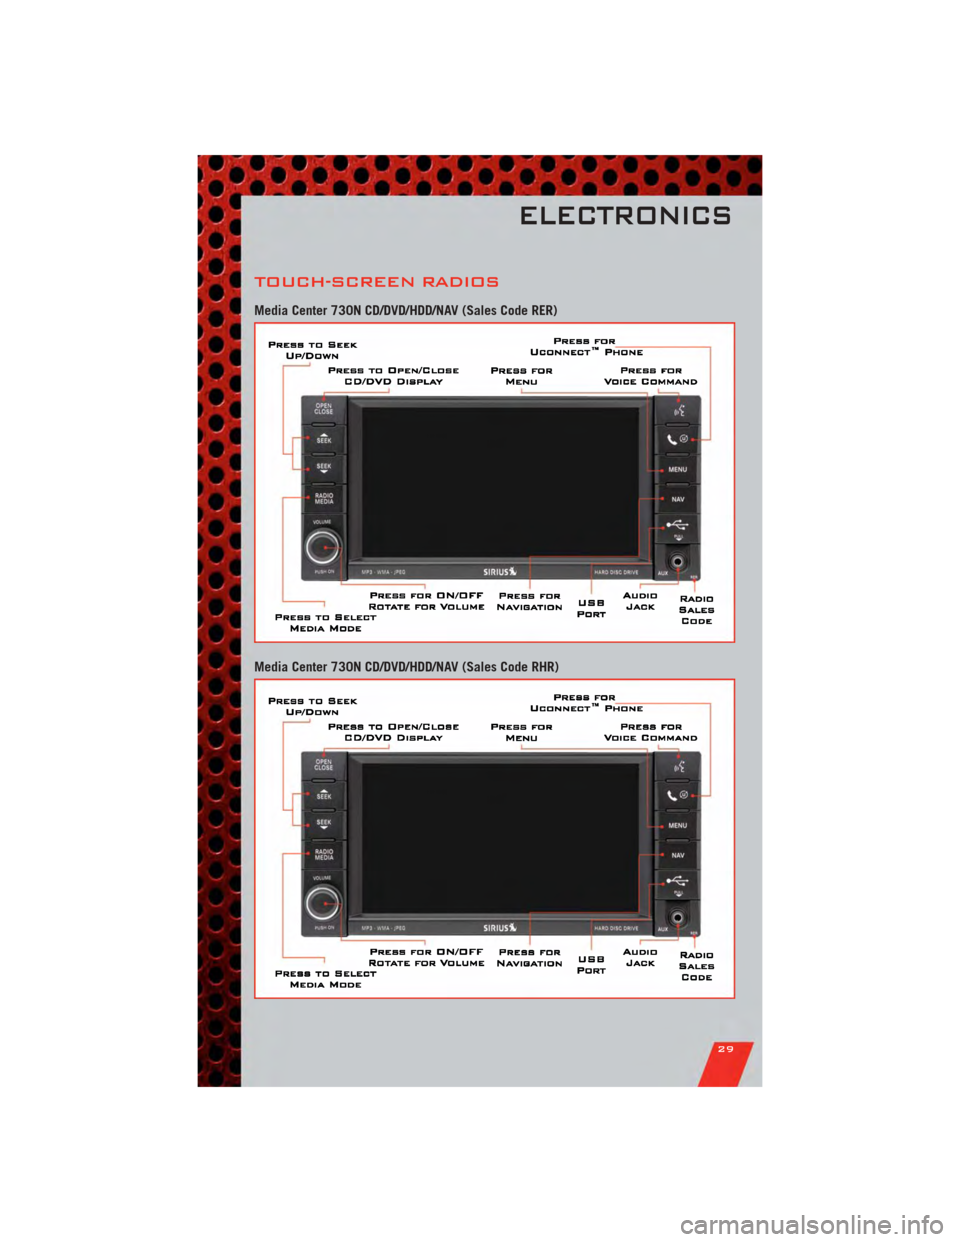 DODGE NITRO 2011 1.G User Guide TOUCH-SCREEN RADIOS
Media Center 730N CD/DVD/HDD/NAV (Sales Code RER)
Media Center 730N CD/DVD/HDD/NAV (Sales Code RHR)
ELECTRONICS
29 